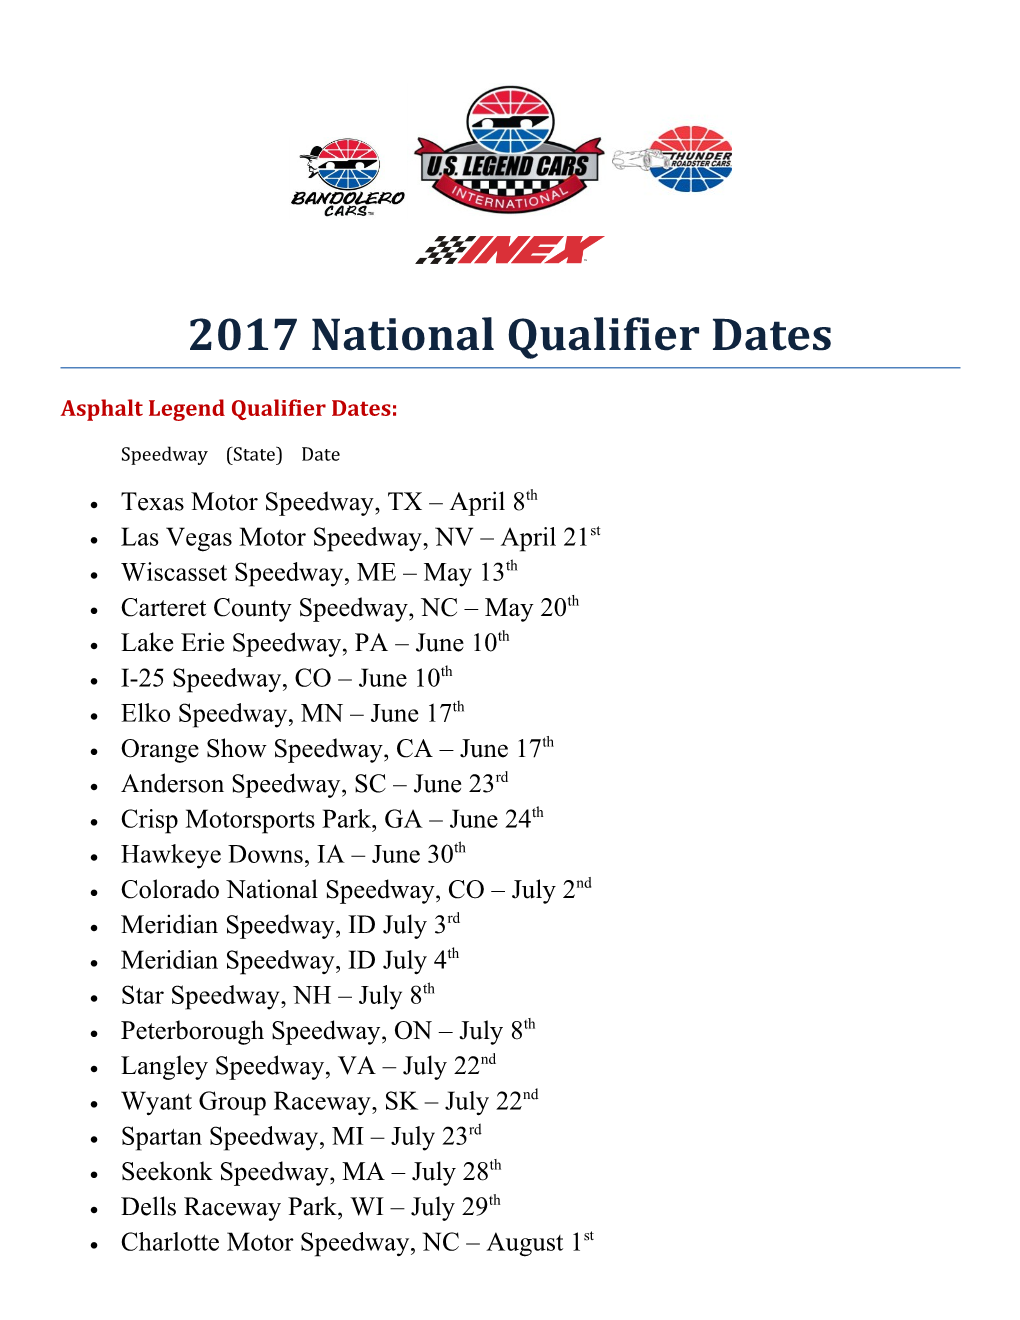 Asphalt Legend Qualifier Dates